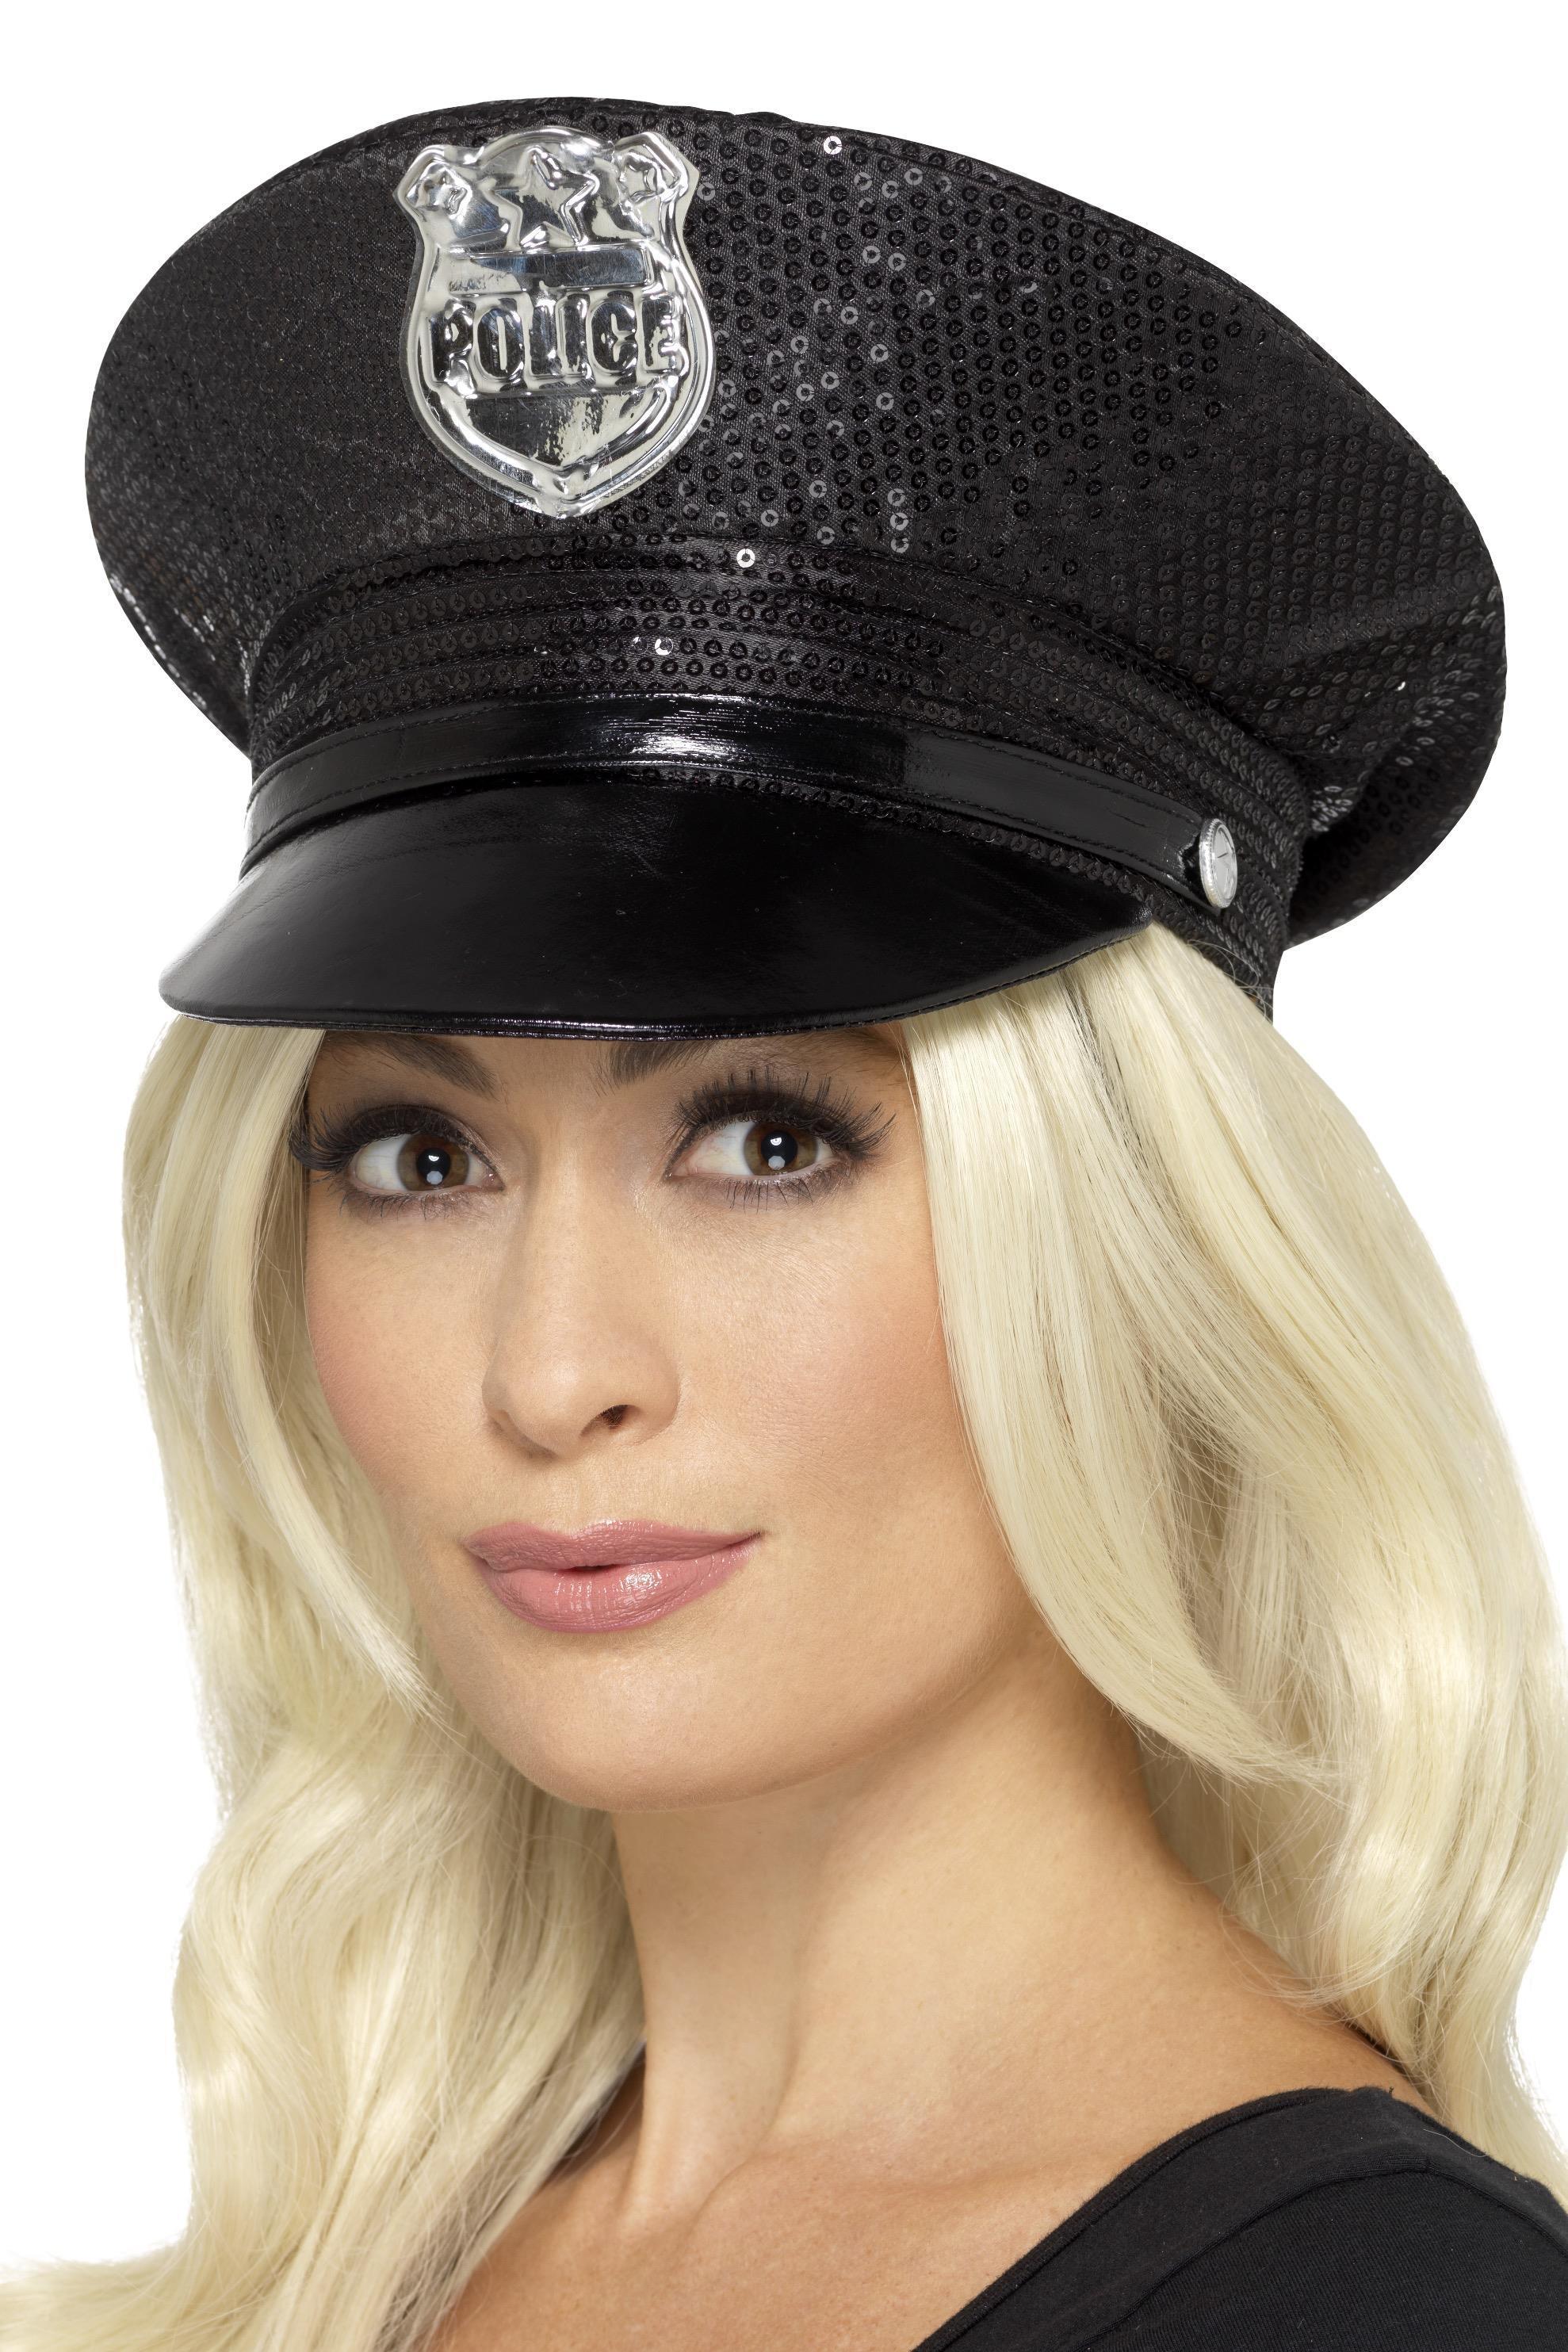 Fever Sequin Police Hat